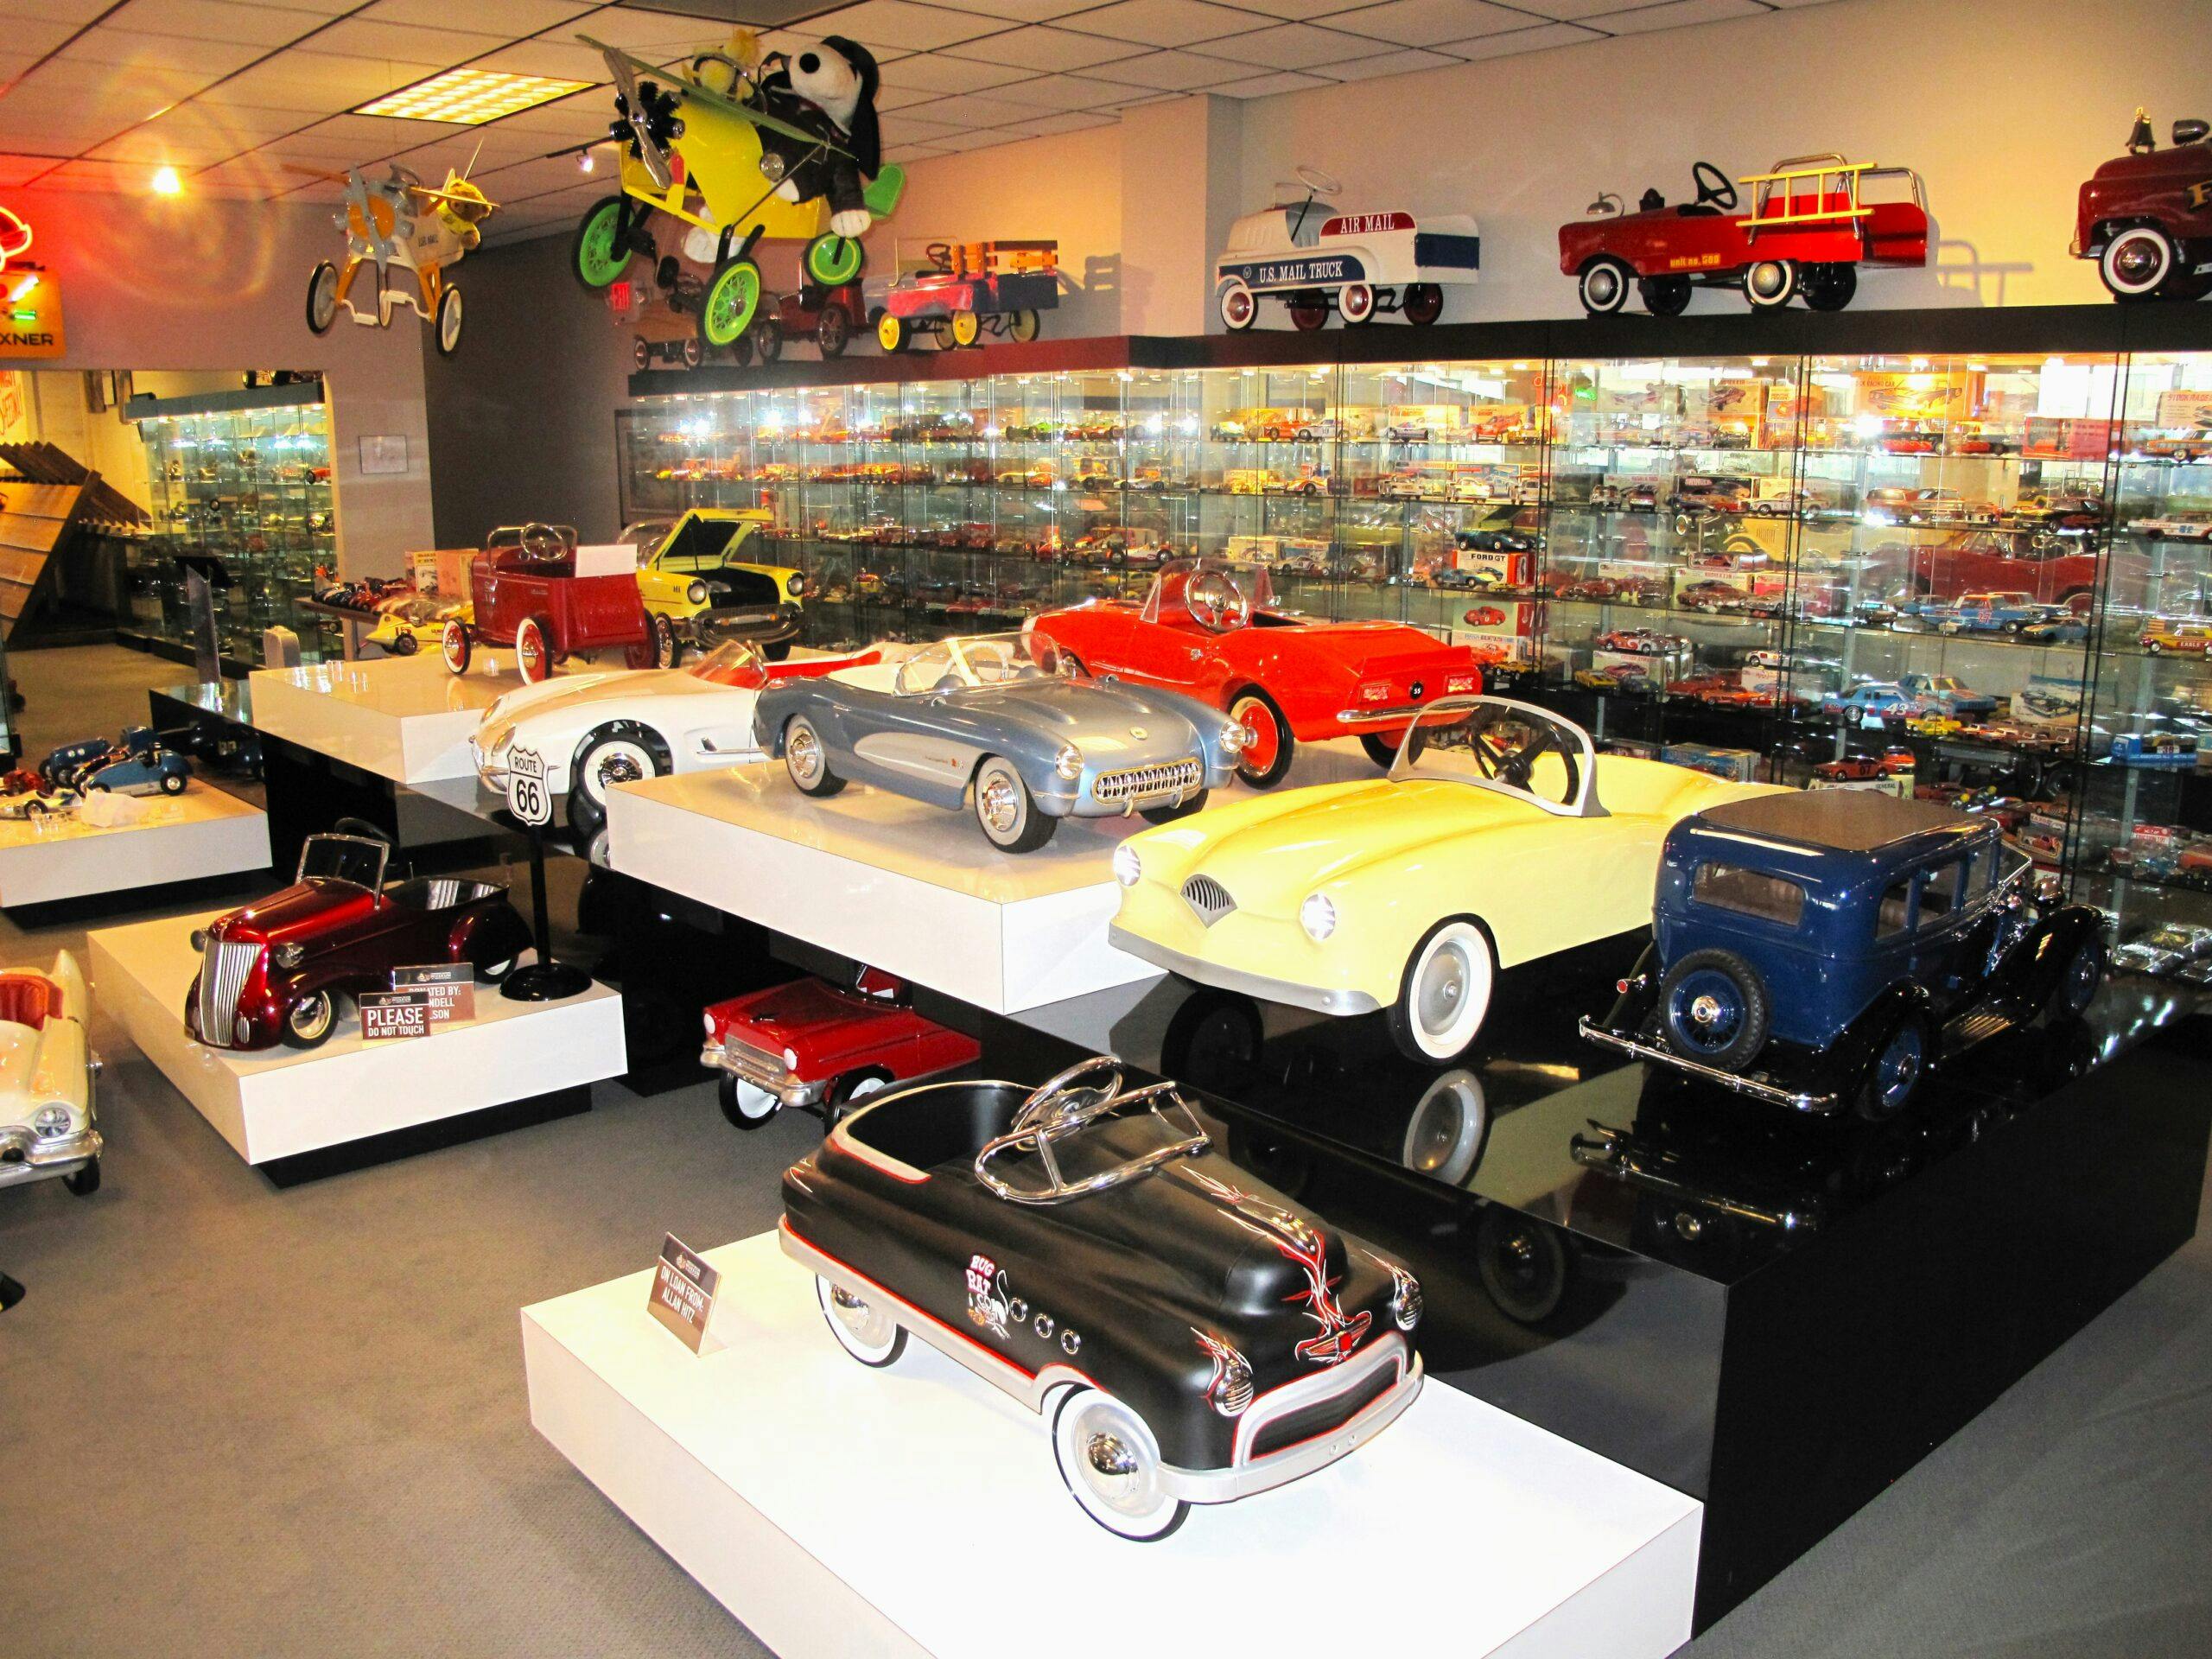 Museum of American Speed models